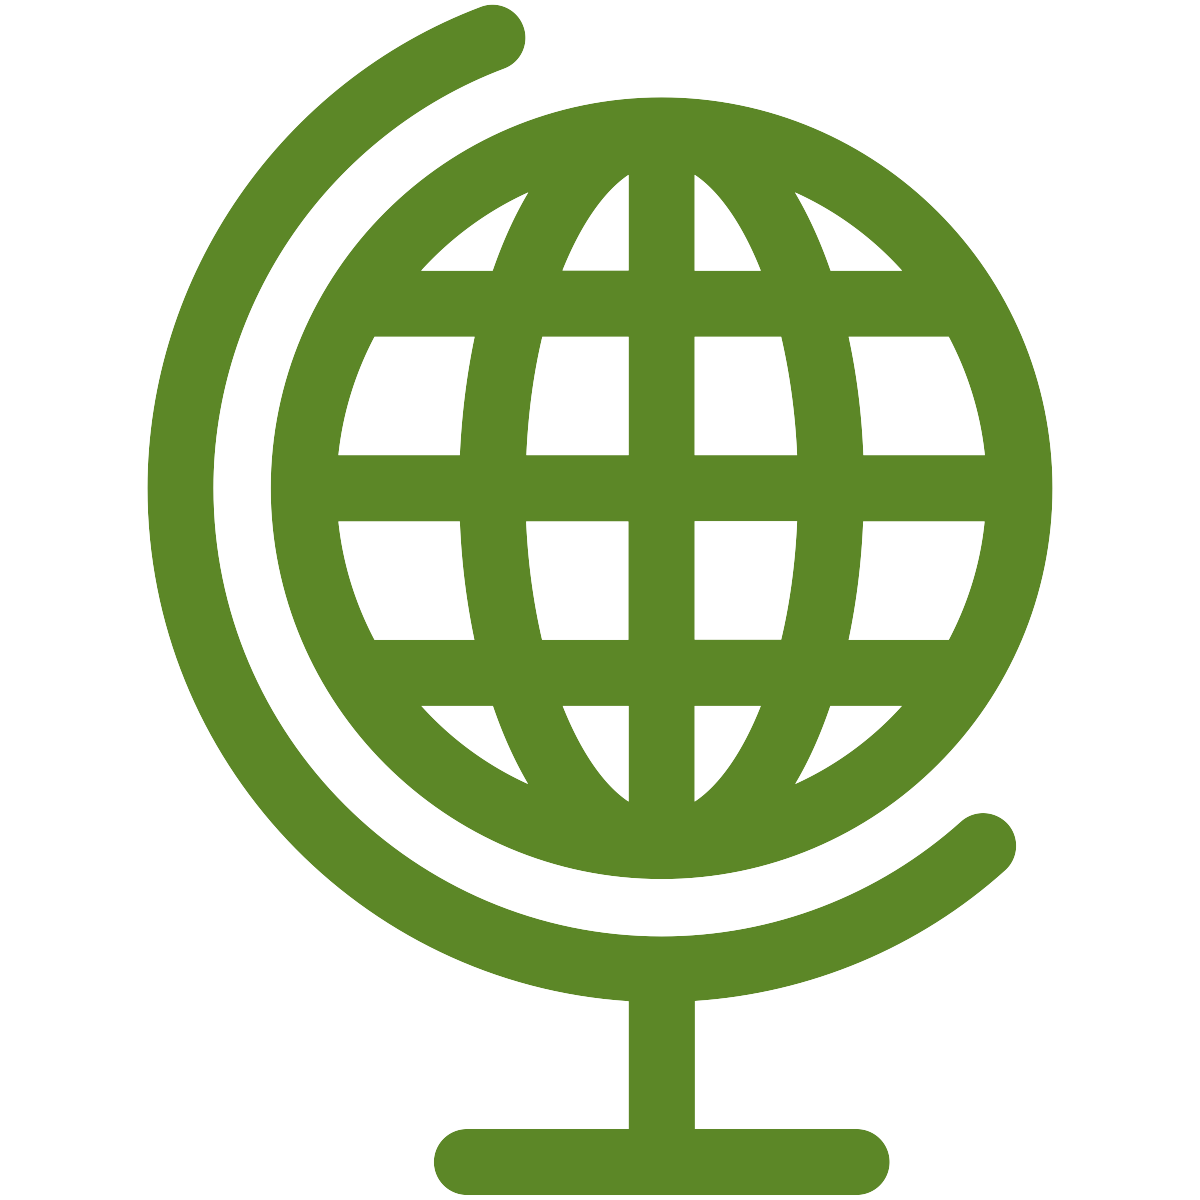 globe icon in green